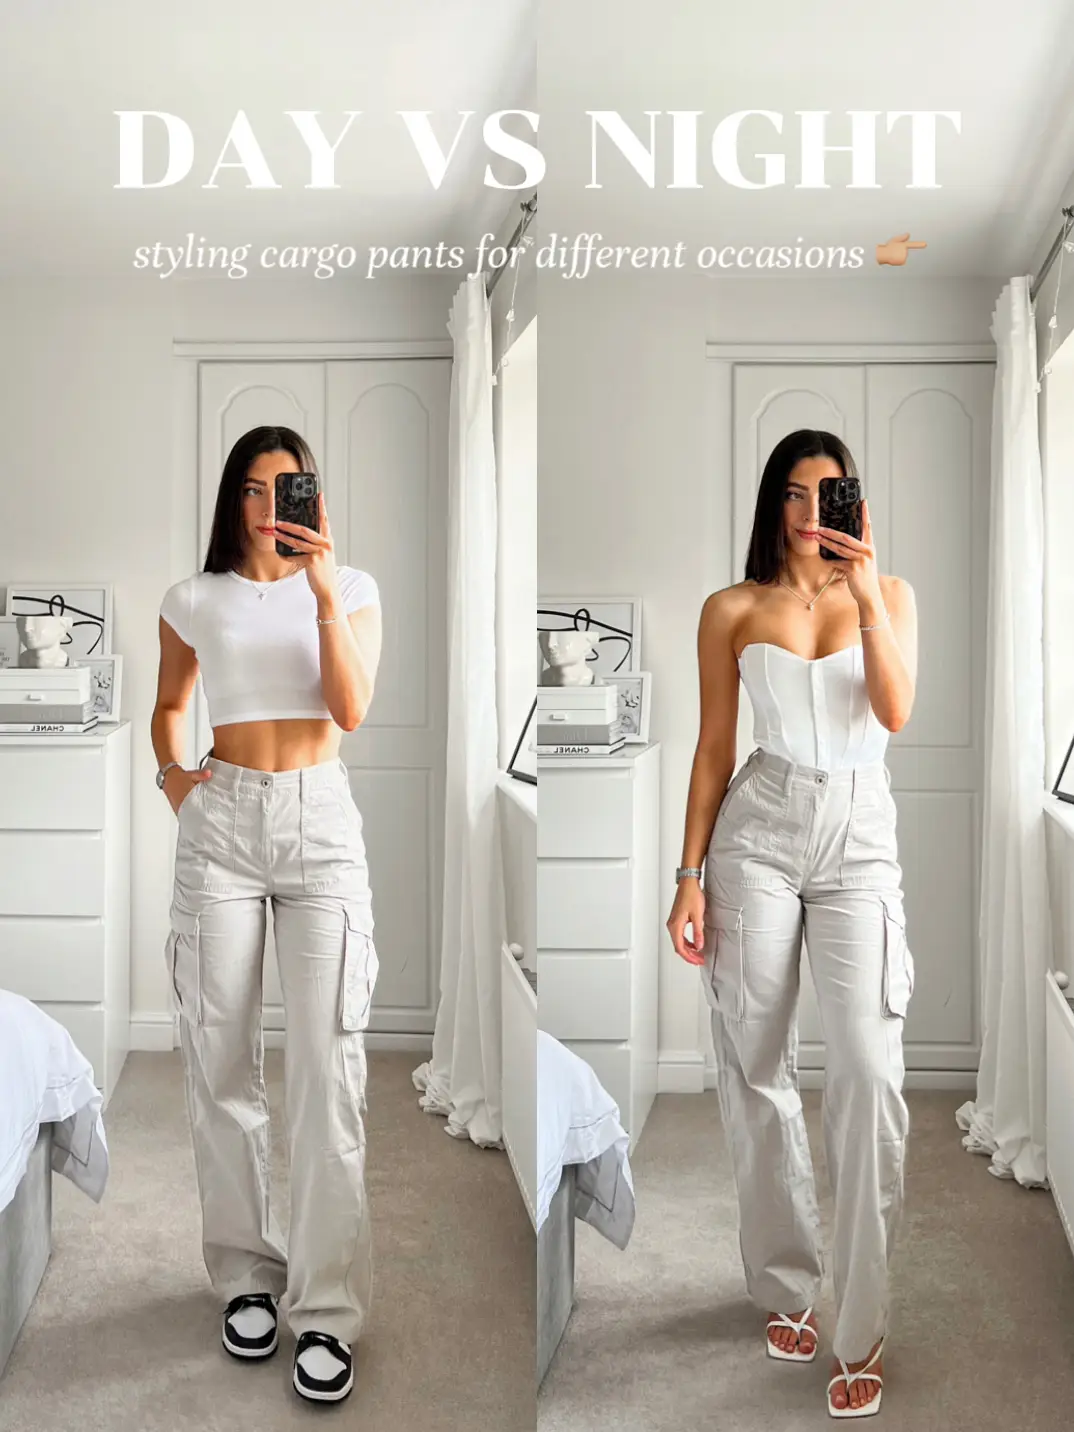 Athleta - Meet the Eastbound pants—designed to take you